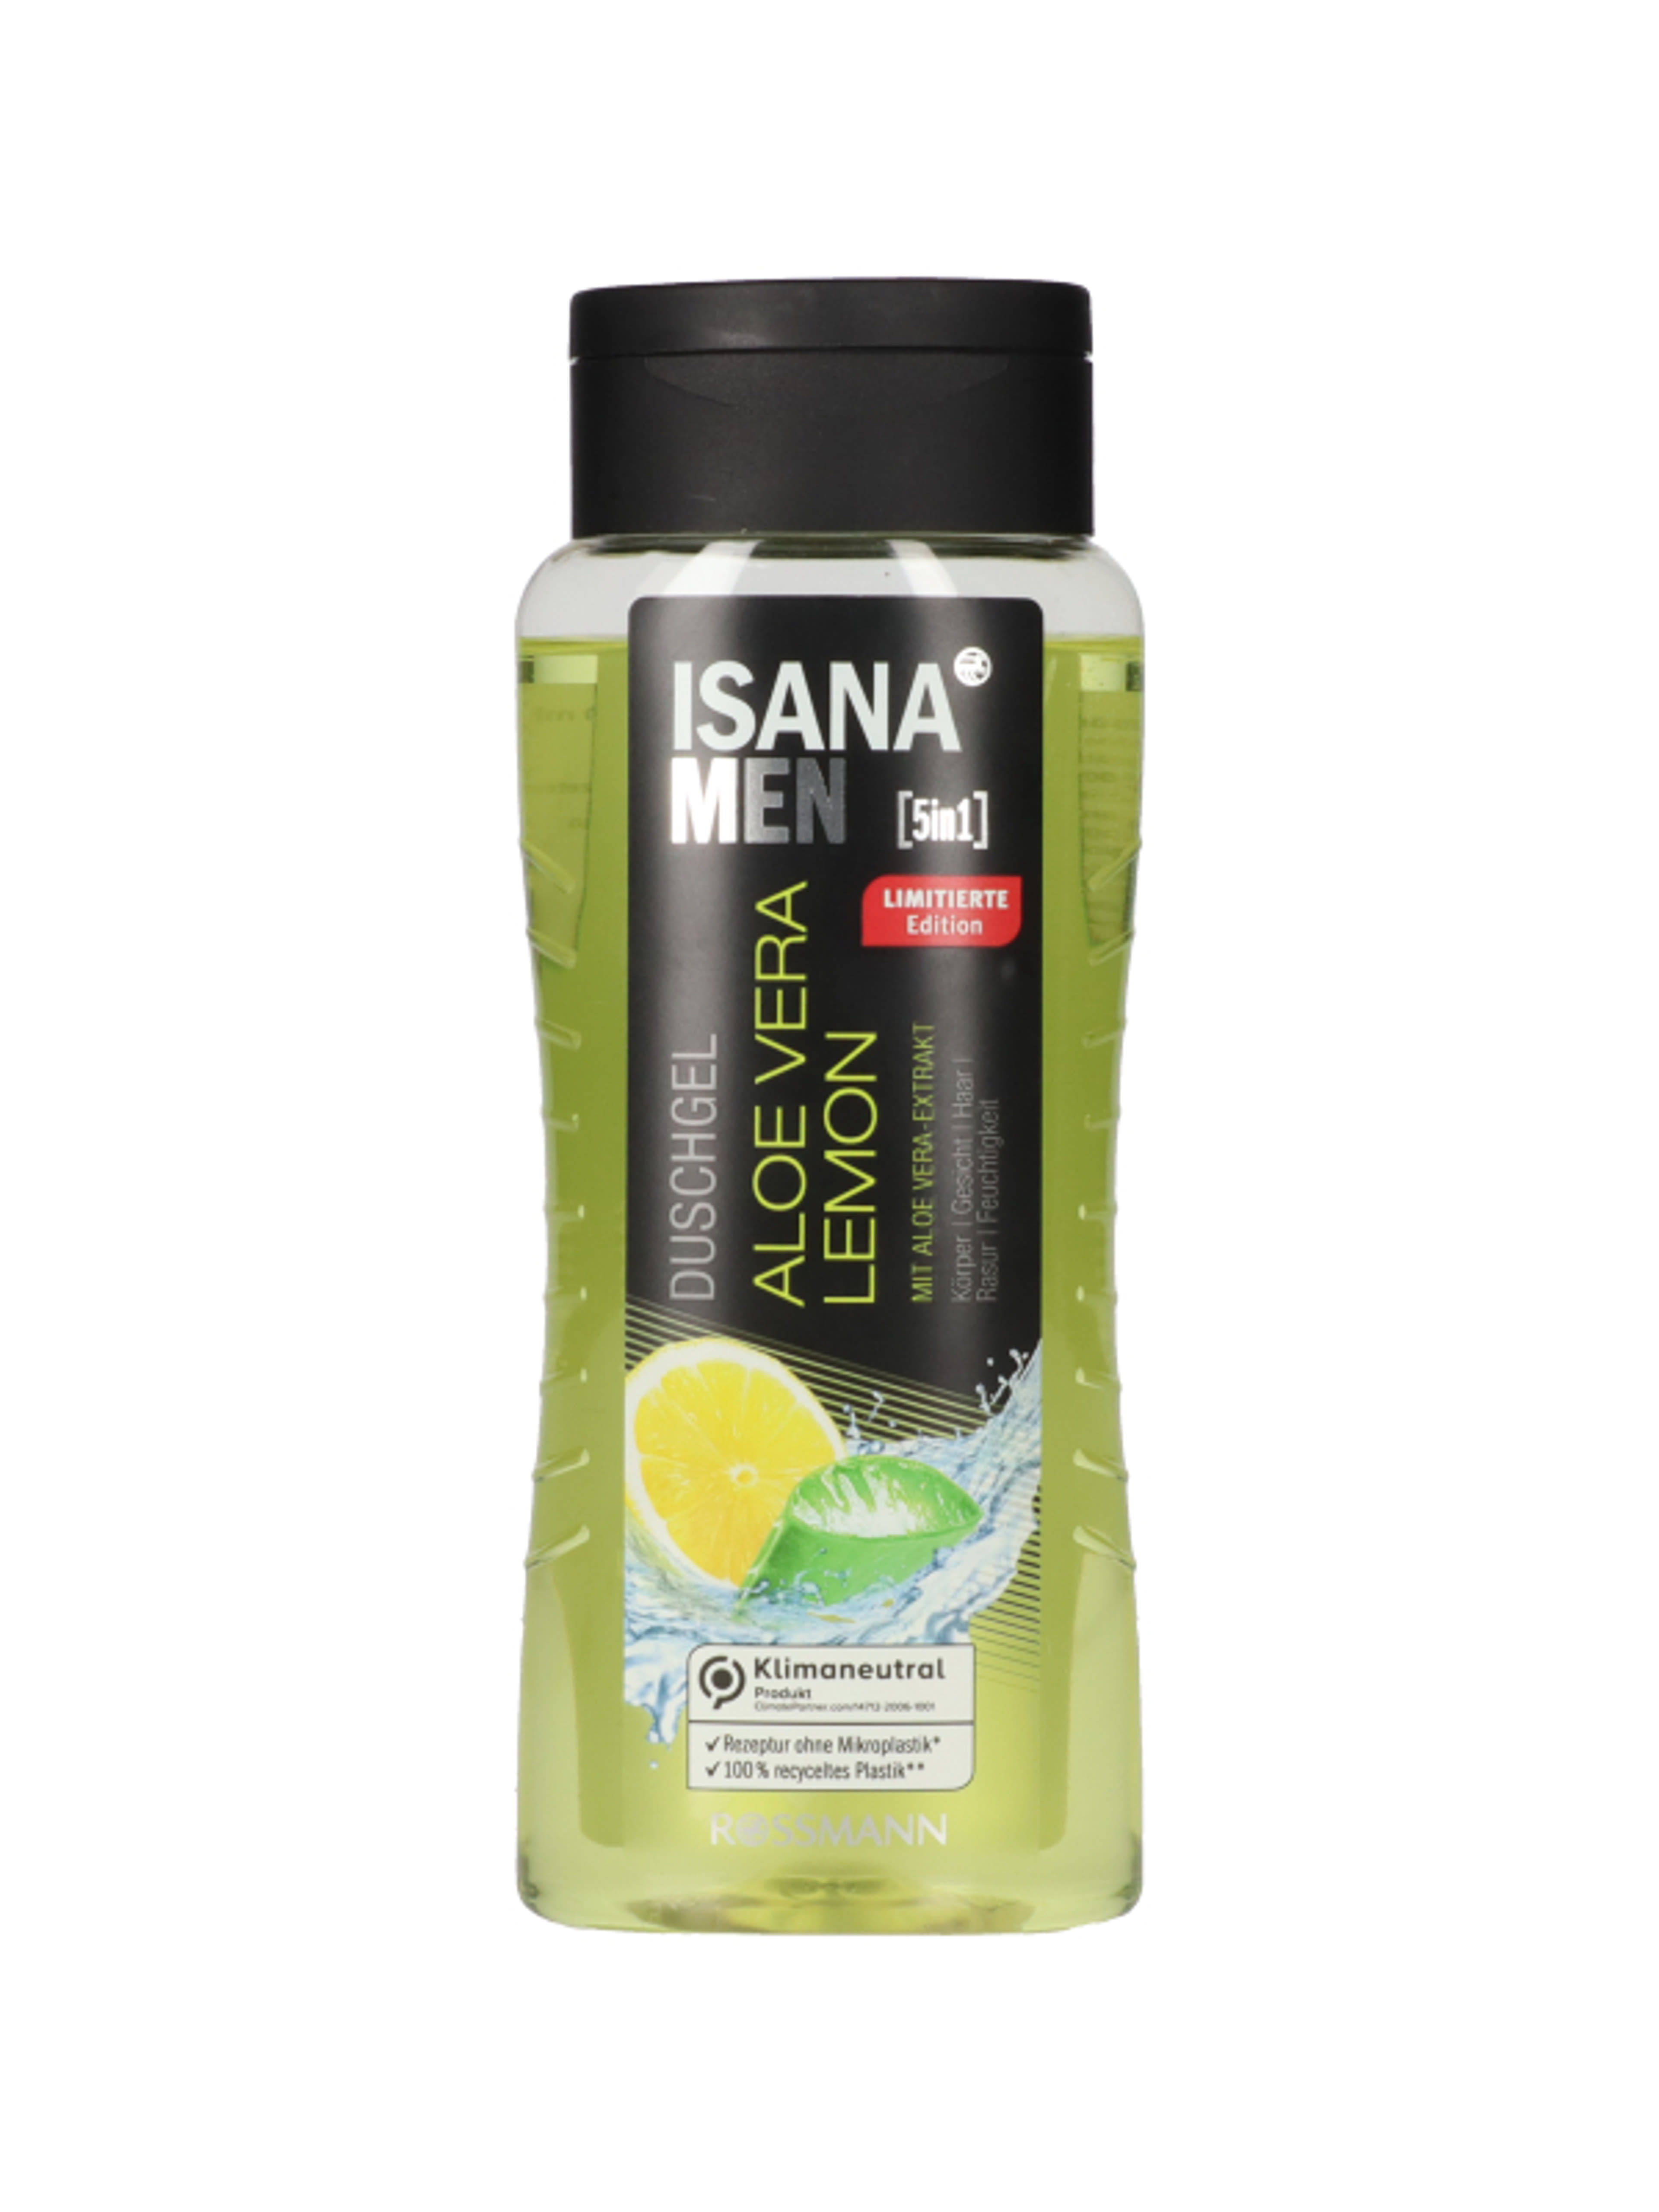 Isana Men 5in1 Aloe Vera & Lemon tusfürdő - 300 ml